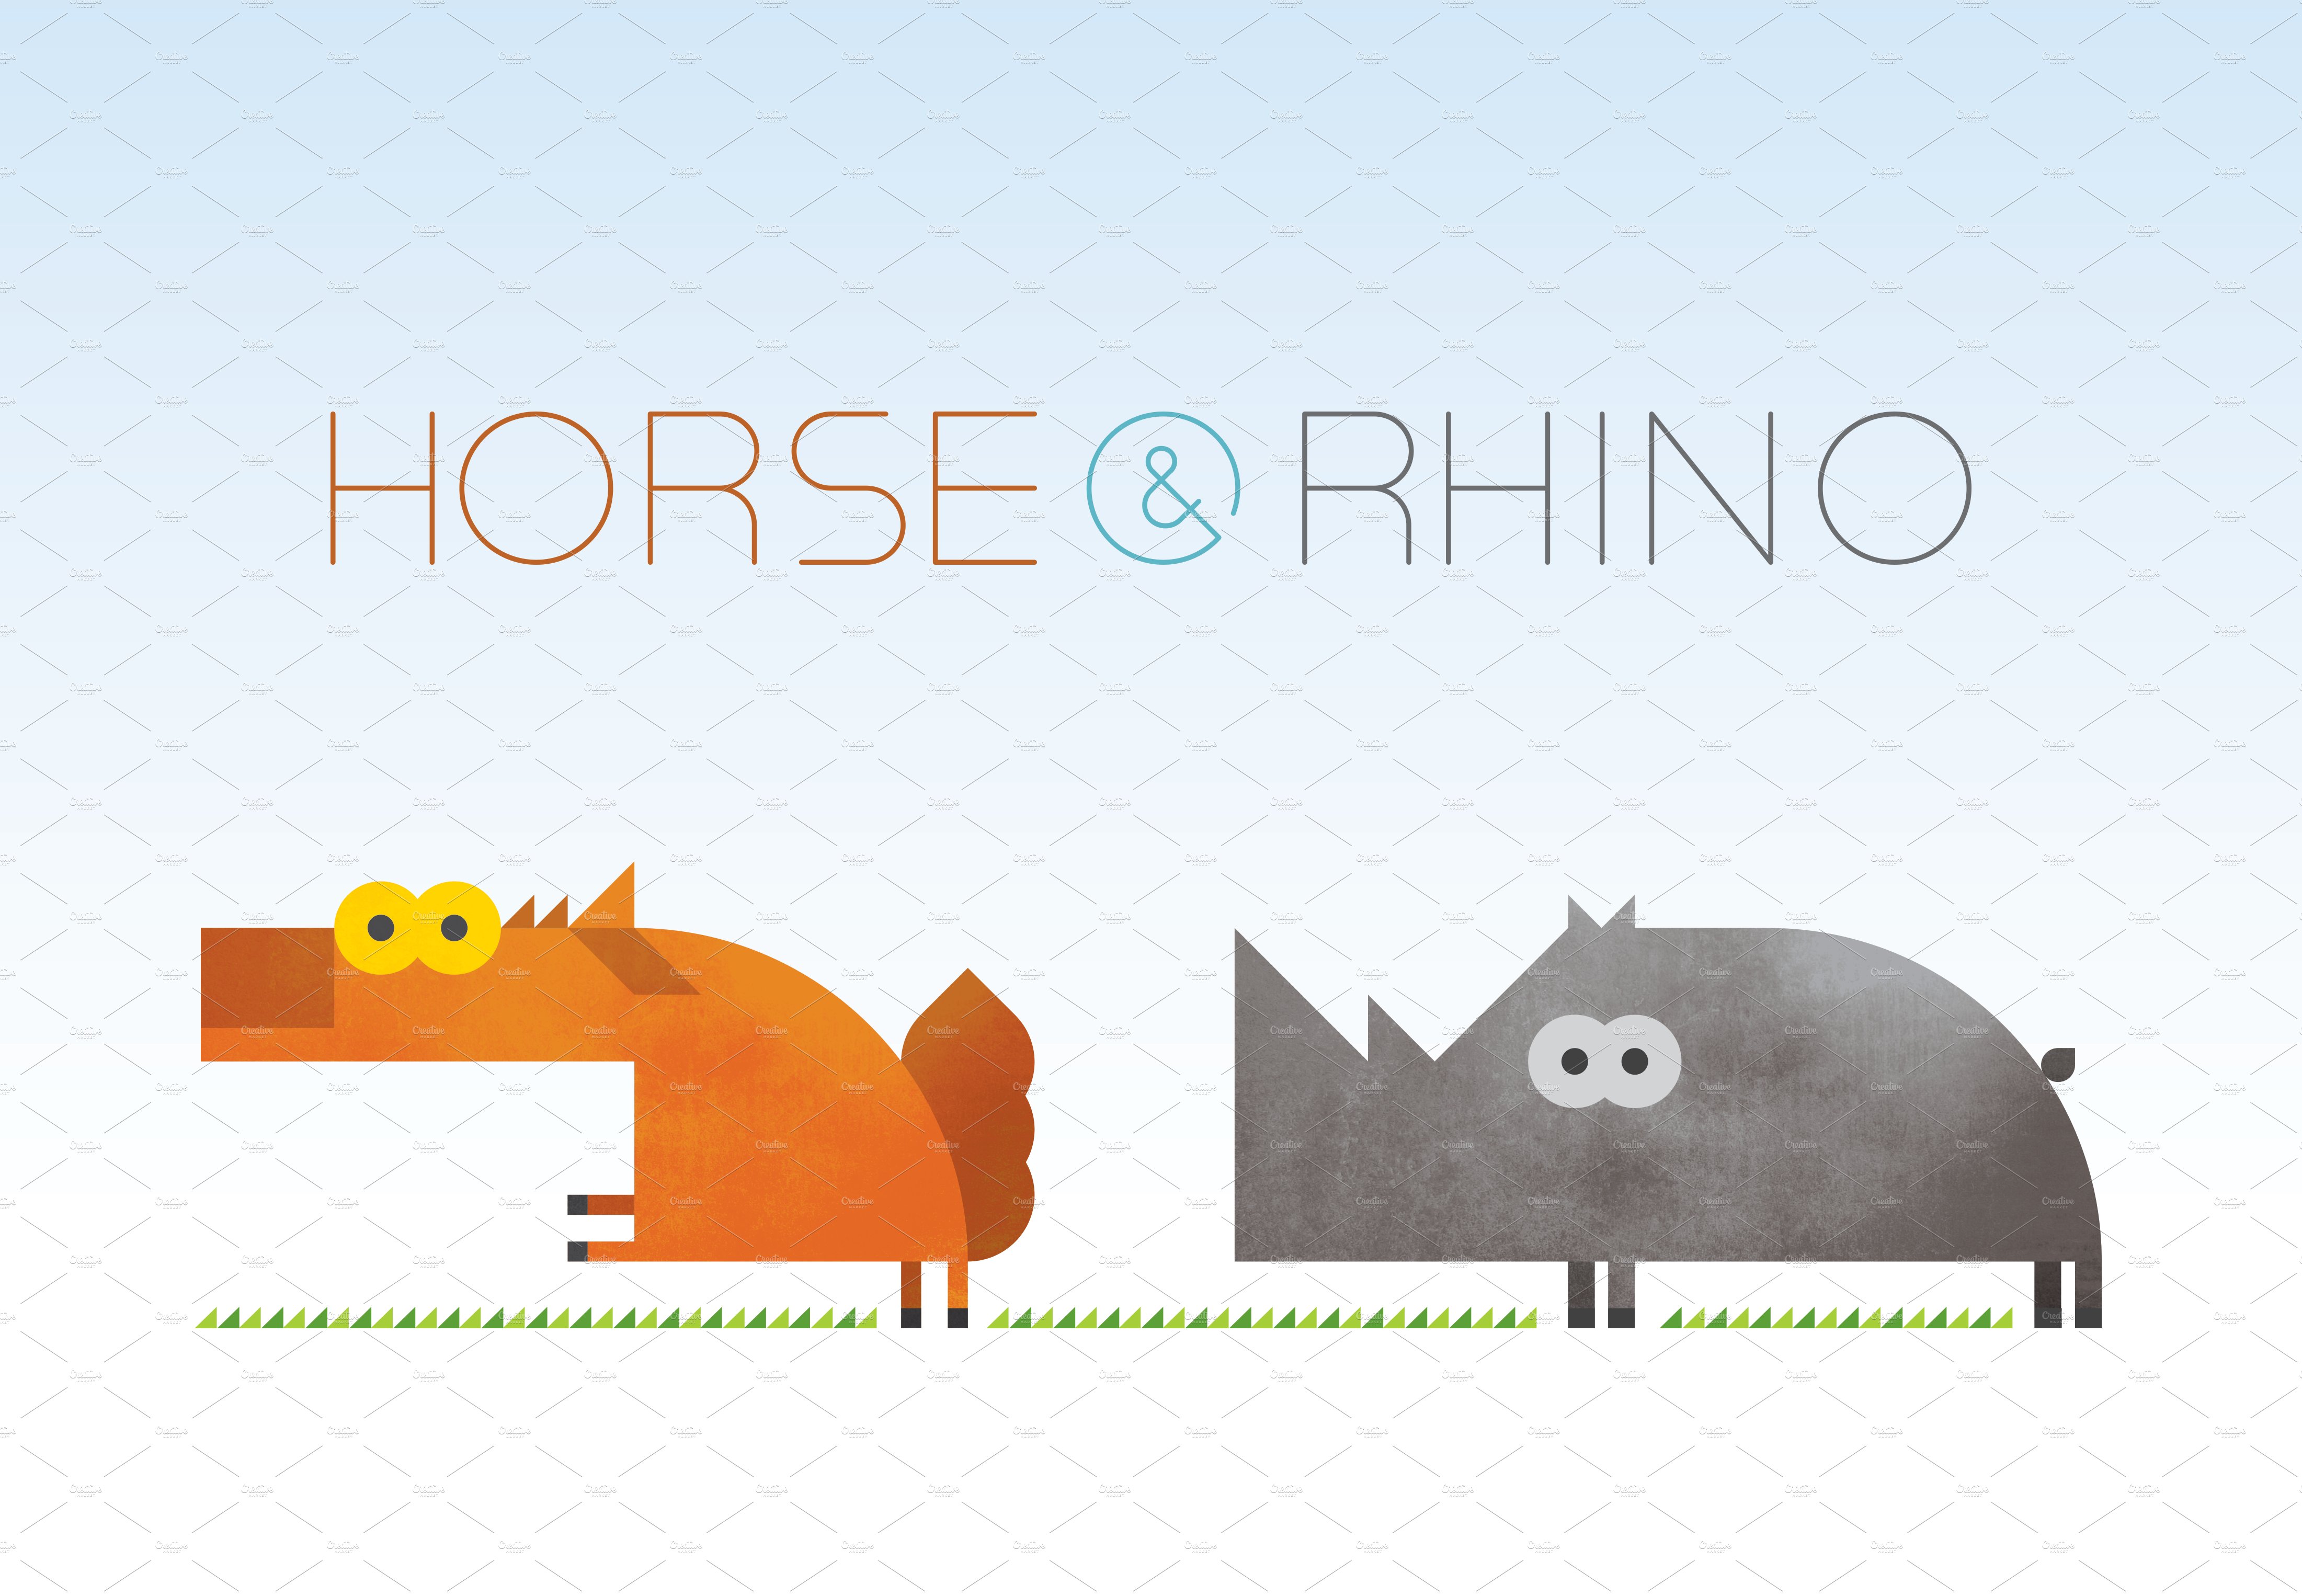 Horse & Rhino cover image.